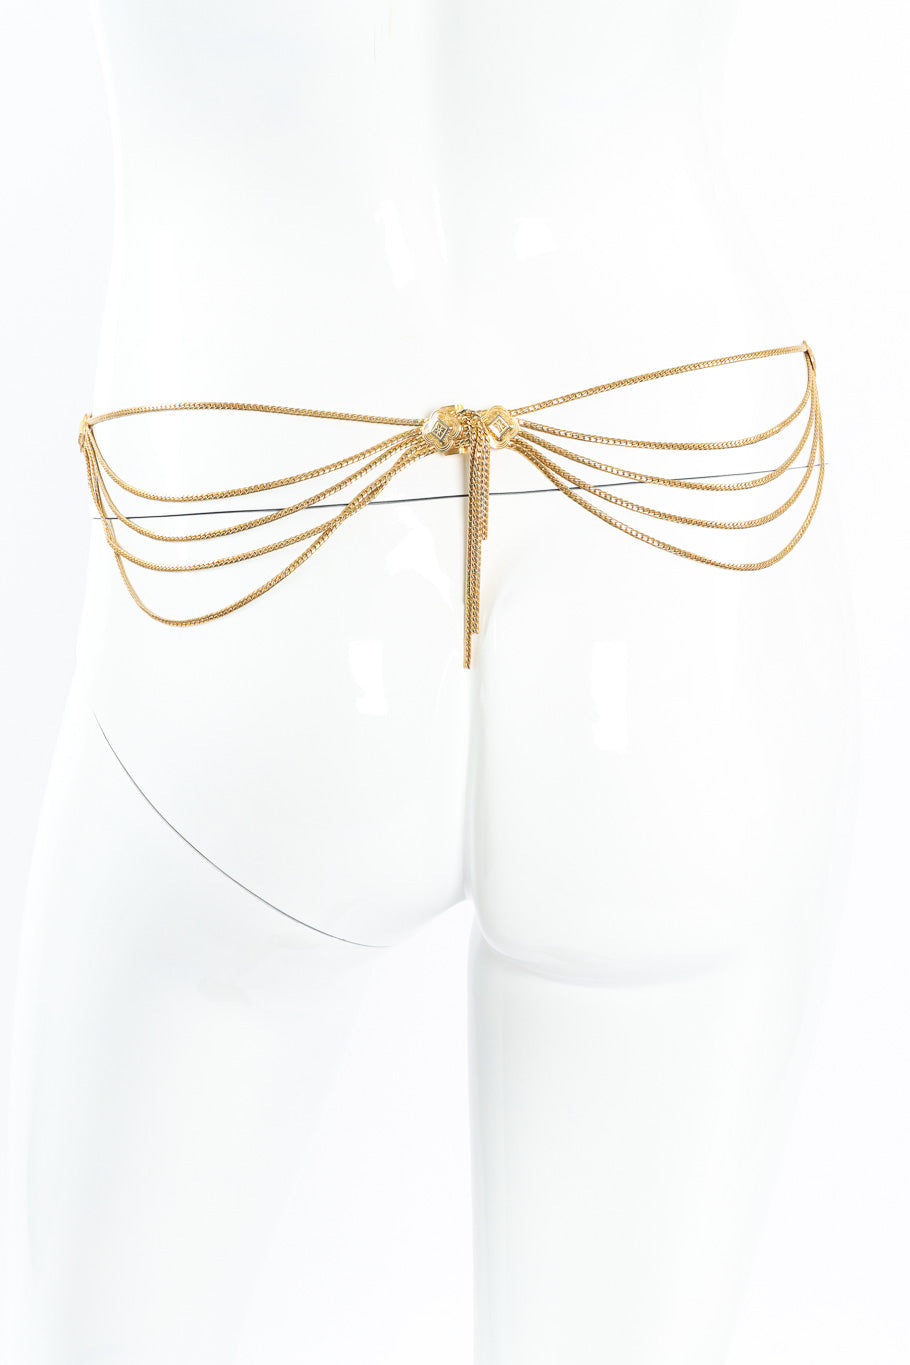 Christian Dior draped waist chain on mannequin backside @recessla